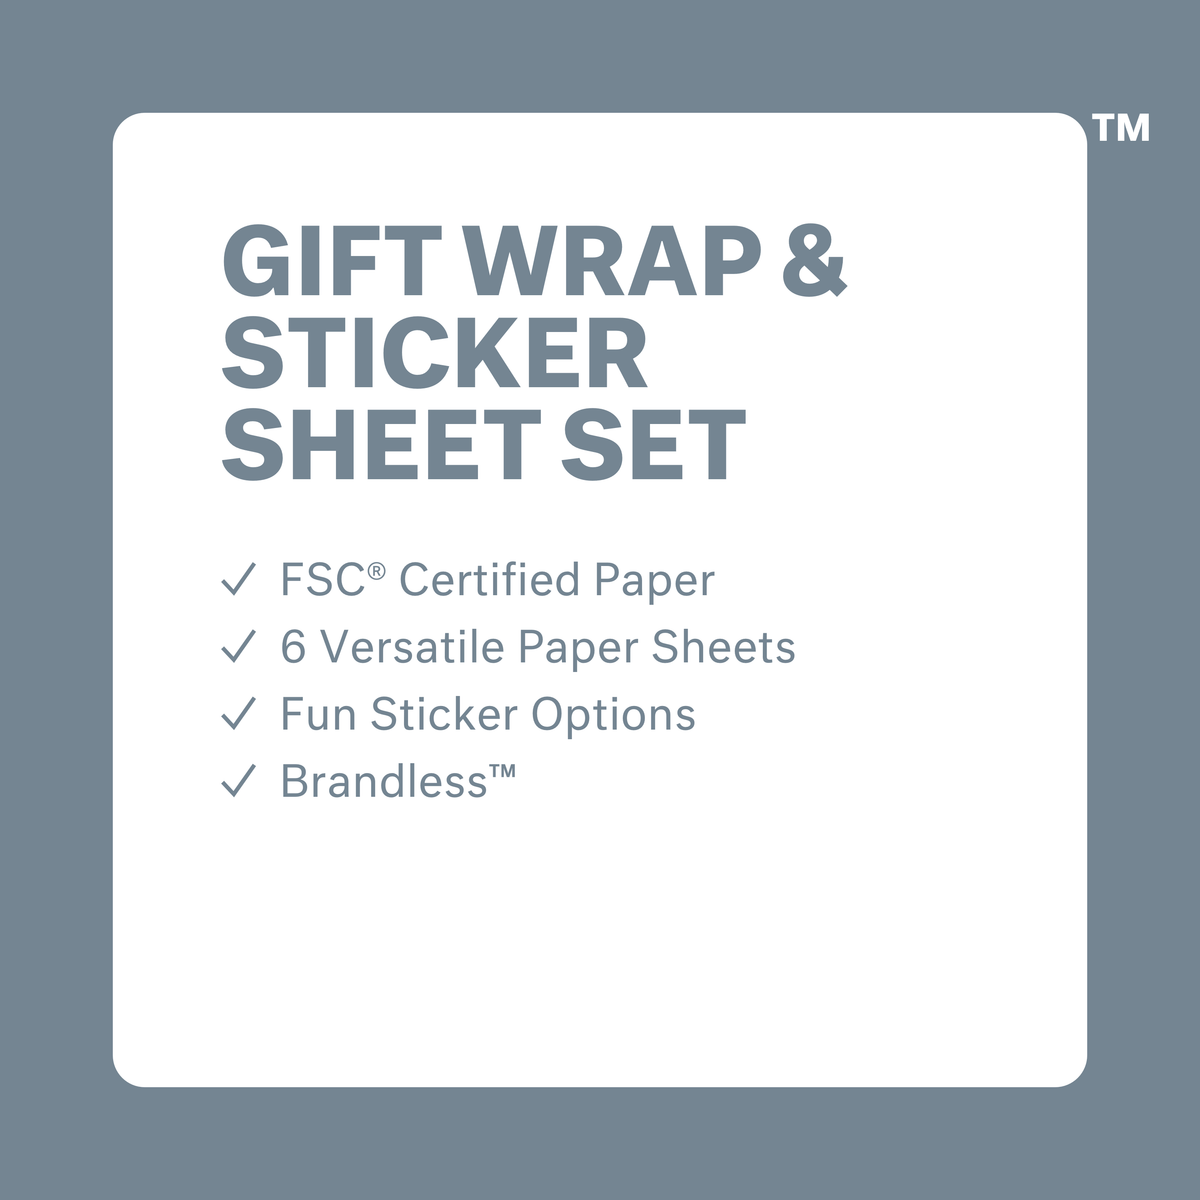 Gift Wrap and Sticker Sheet Set: FSC certified paper, 6 versatile paper sheets, fun sticker options, Brandless.